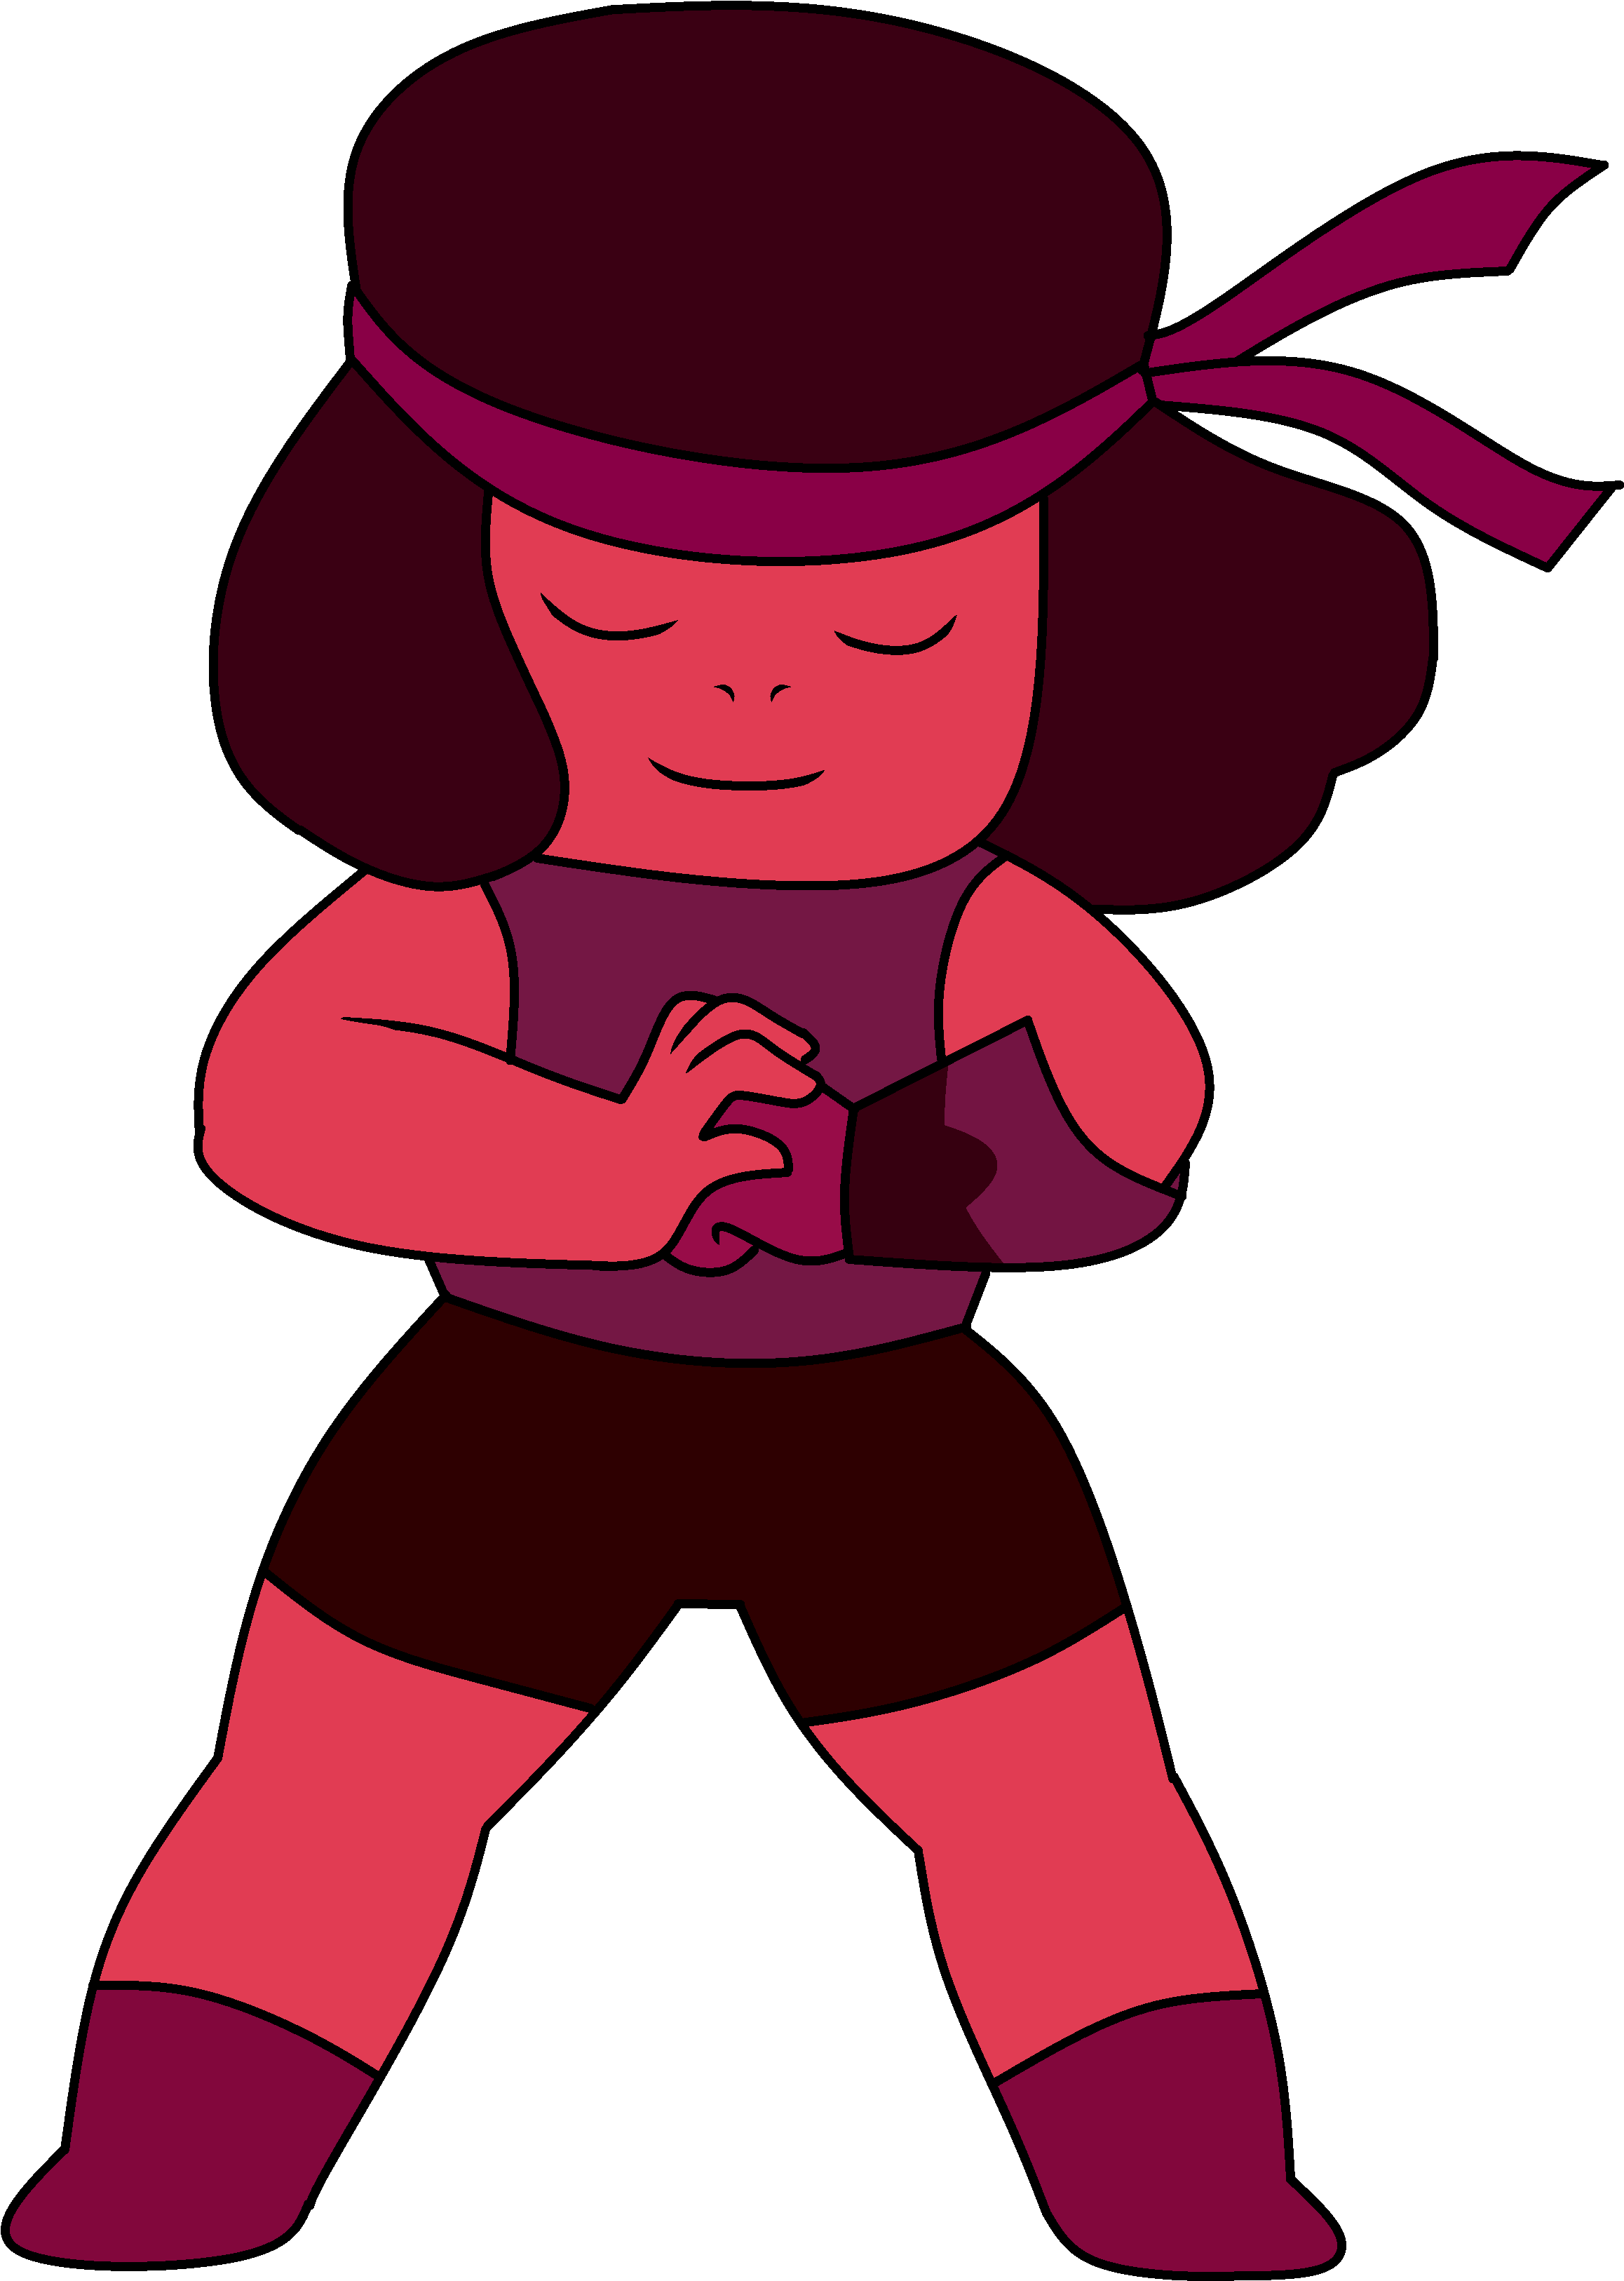 Ruby - Ruby Steven Universe Garnet (2499x3528)